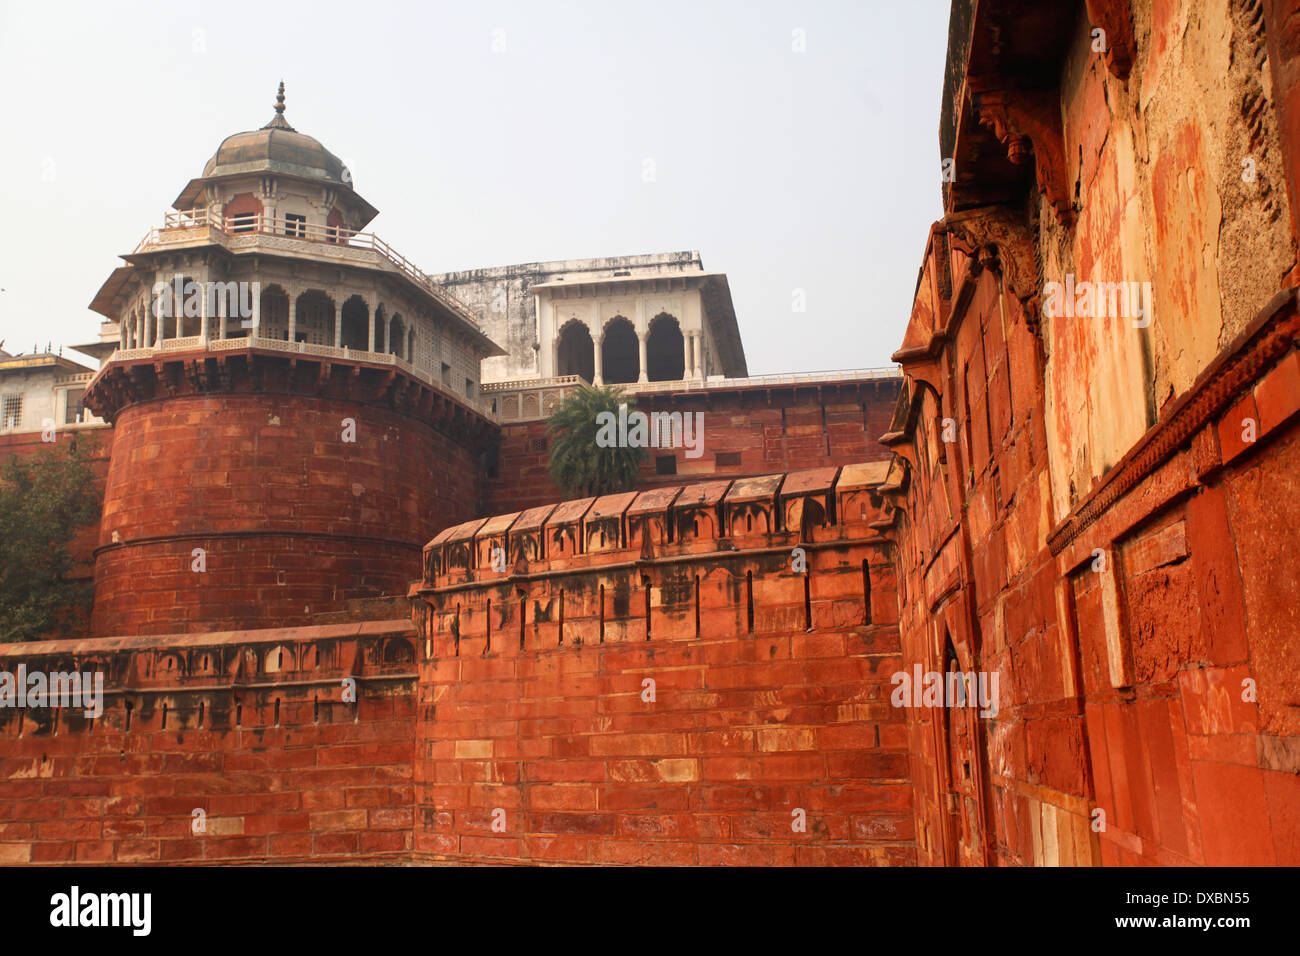 Detalle de la "fortaleza roja" en las paredes. Agra, Uttar Pradesh, India. Foto de stock